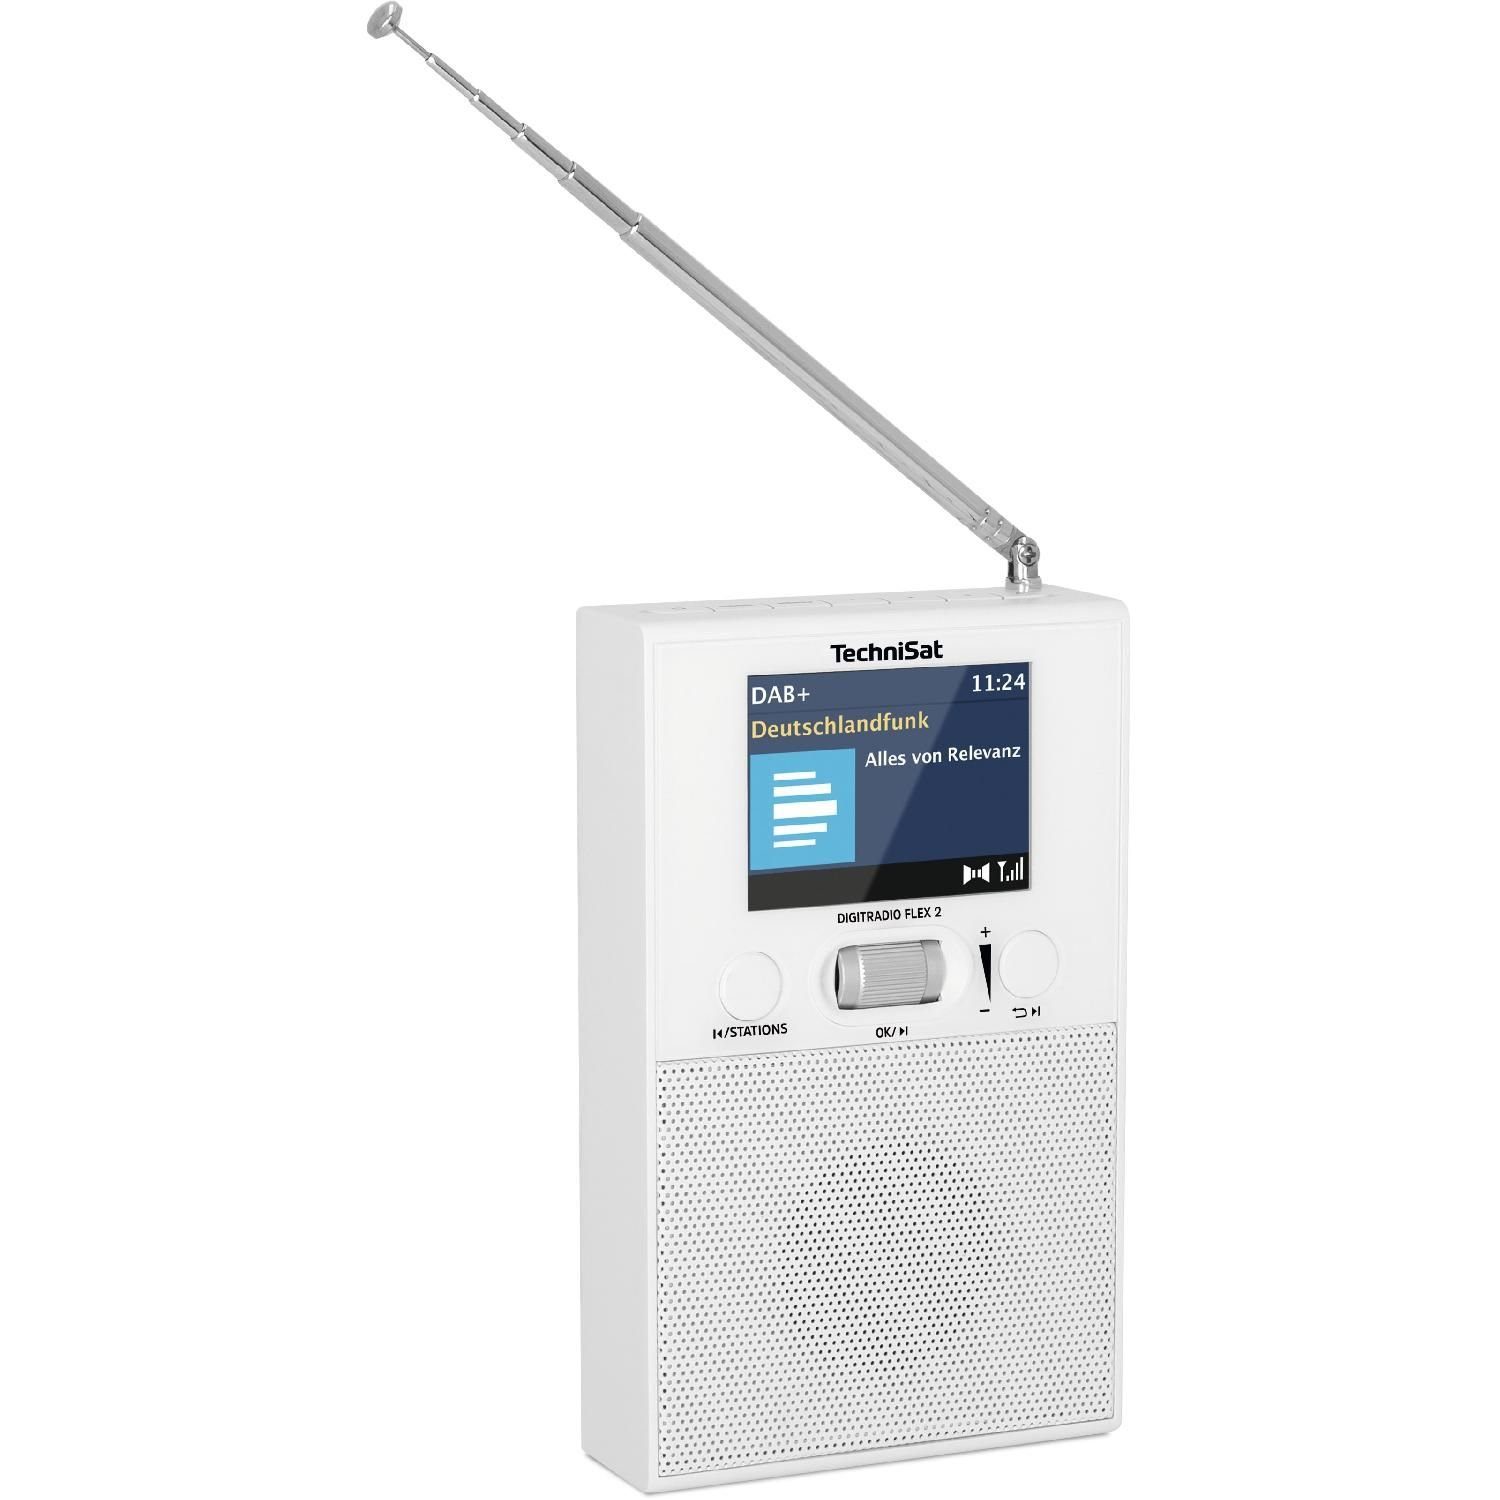 Digitalradio, 2 DAB+ TFT-Farbdisplay Bluetooth TechniSat (DAB+ (DAB) FLEX Wecker UKW-Radio) DIGITRADIO Digitalradio UKW